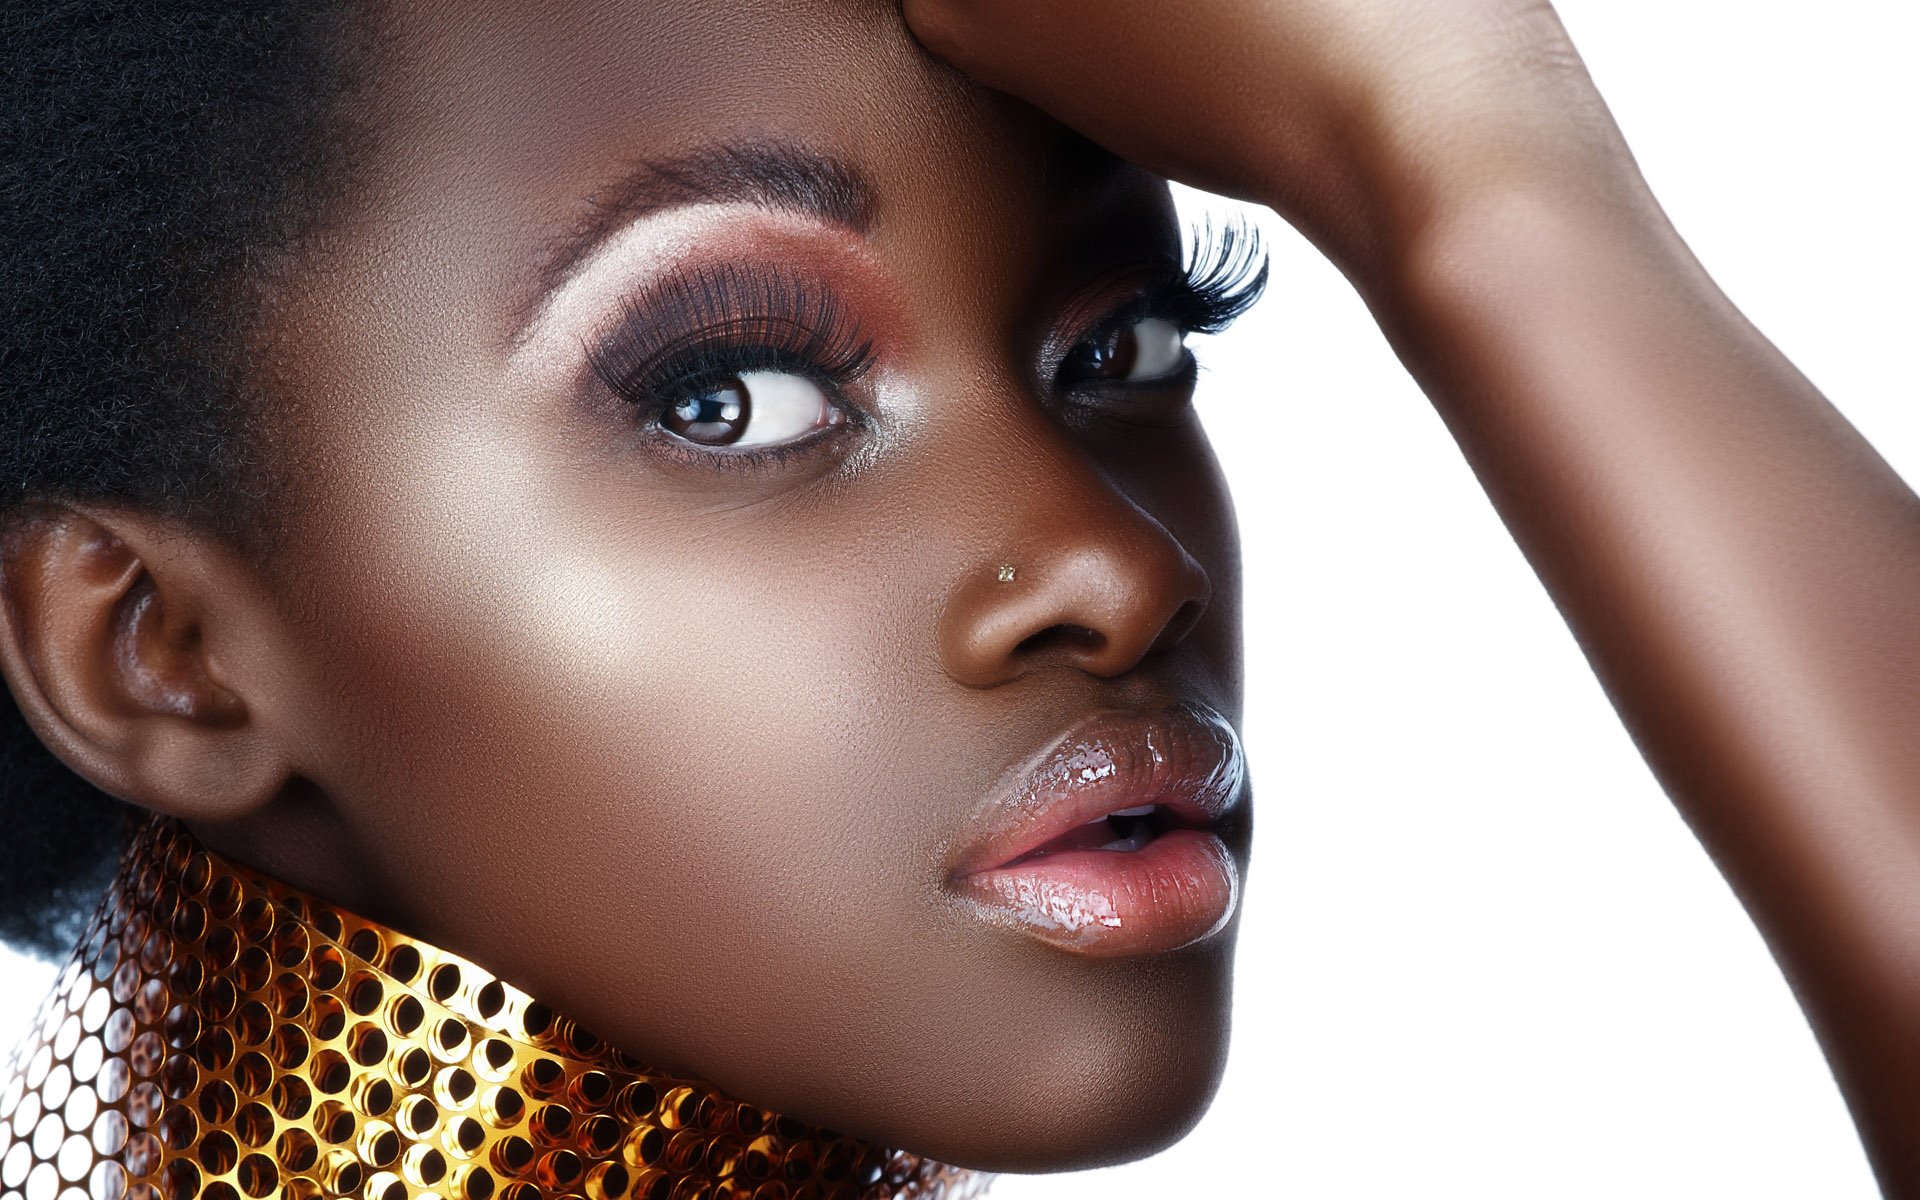 Top Story Skin Tone What Makes Black Women Beautiful Dangerous